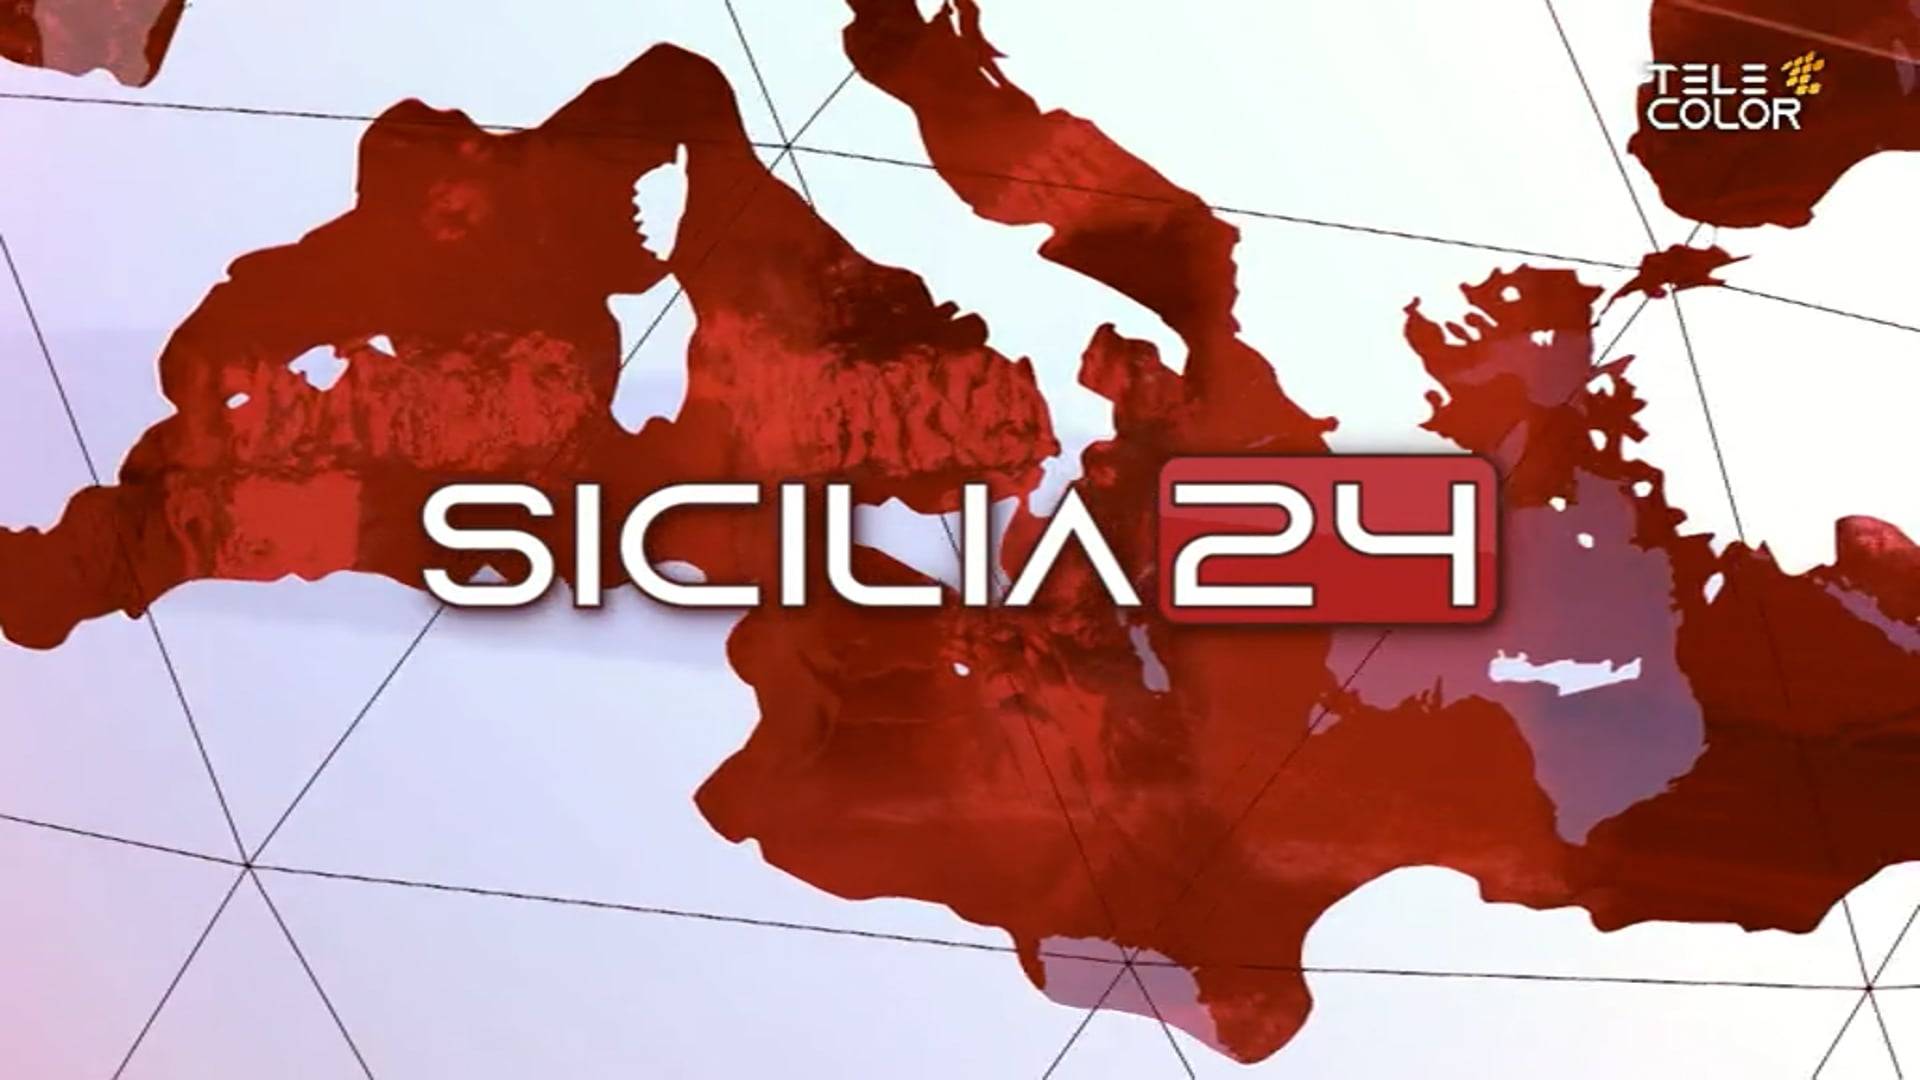 sicilia24-11-marzo-2022-ore-19-vimeo-thumbnail.jpg